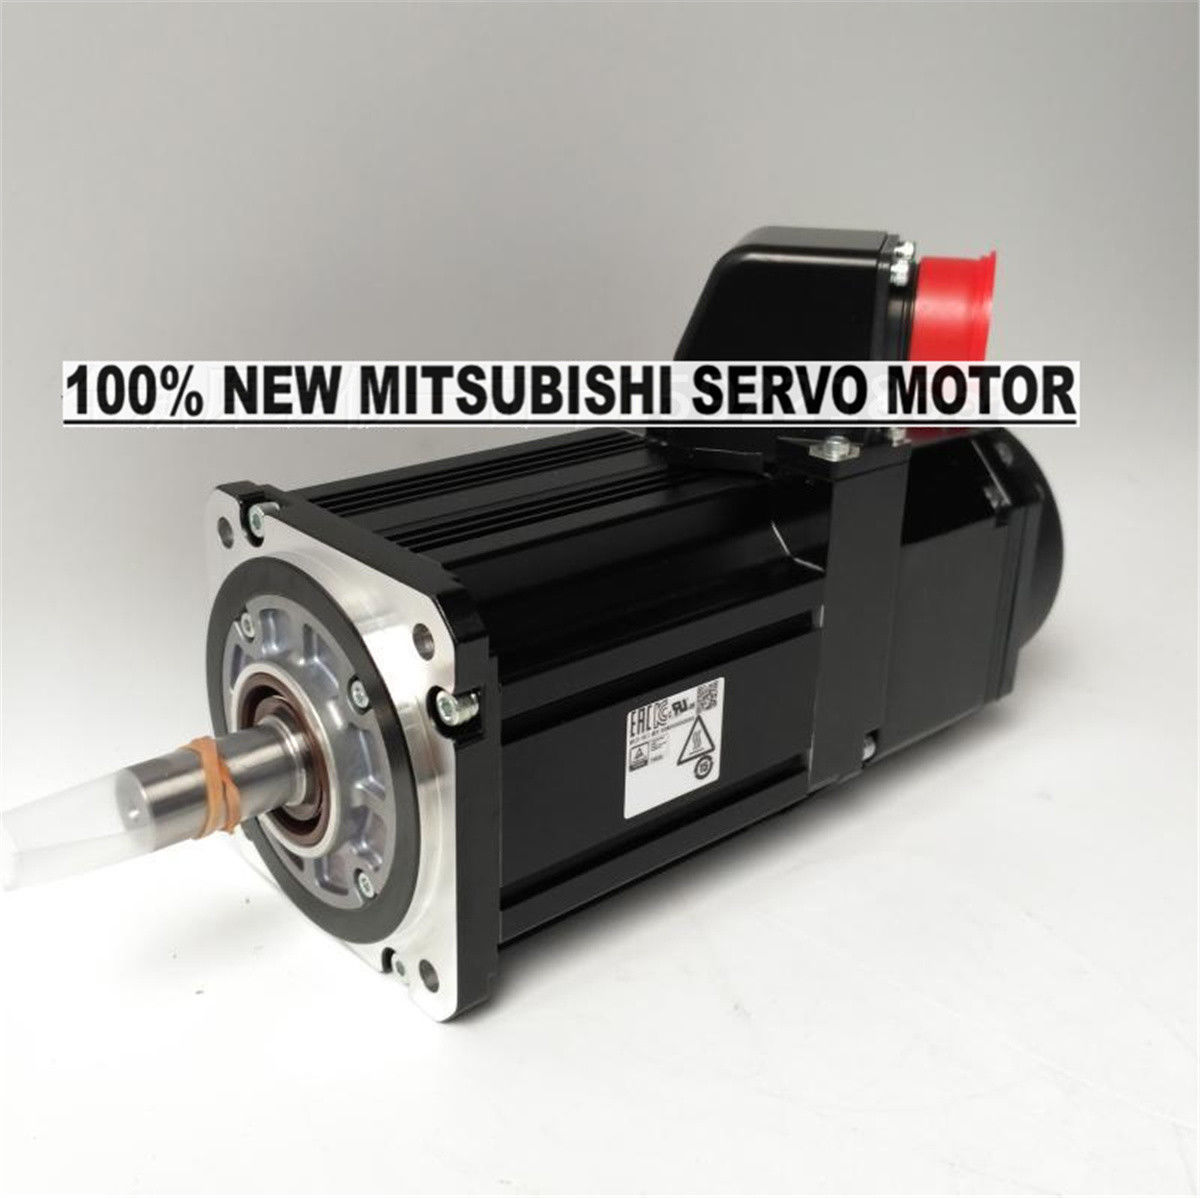 Brand NEW Mitsubishi Servo Motor HG-JR103B in box HGJR103B - zum Schließen ins Bild klicken